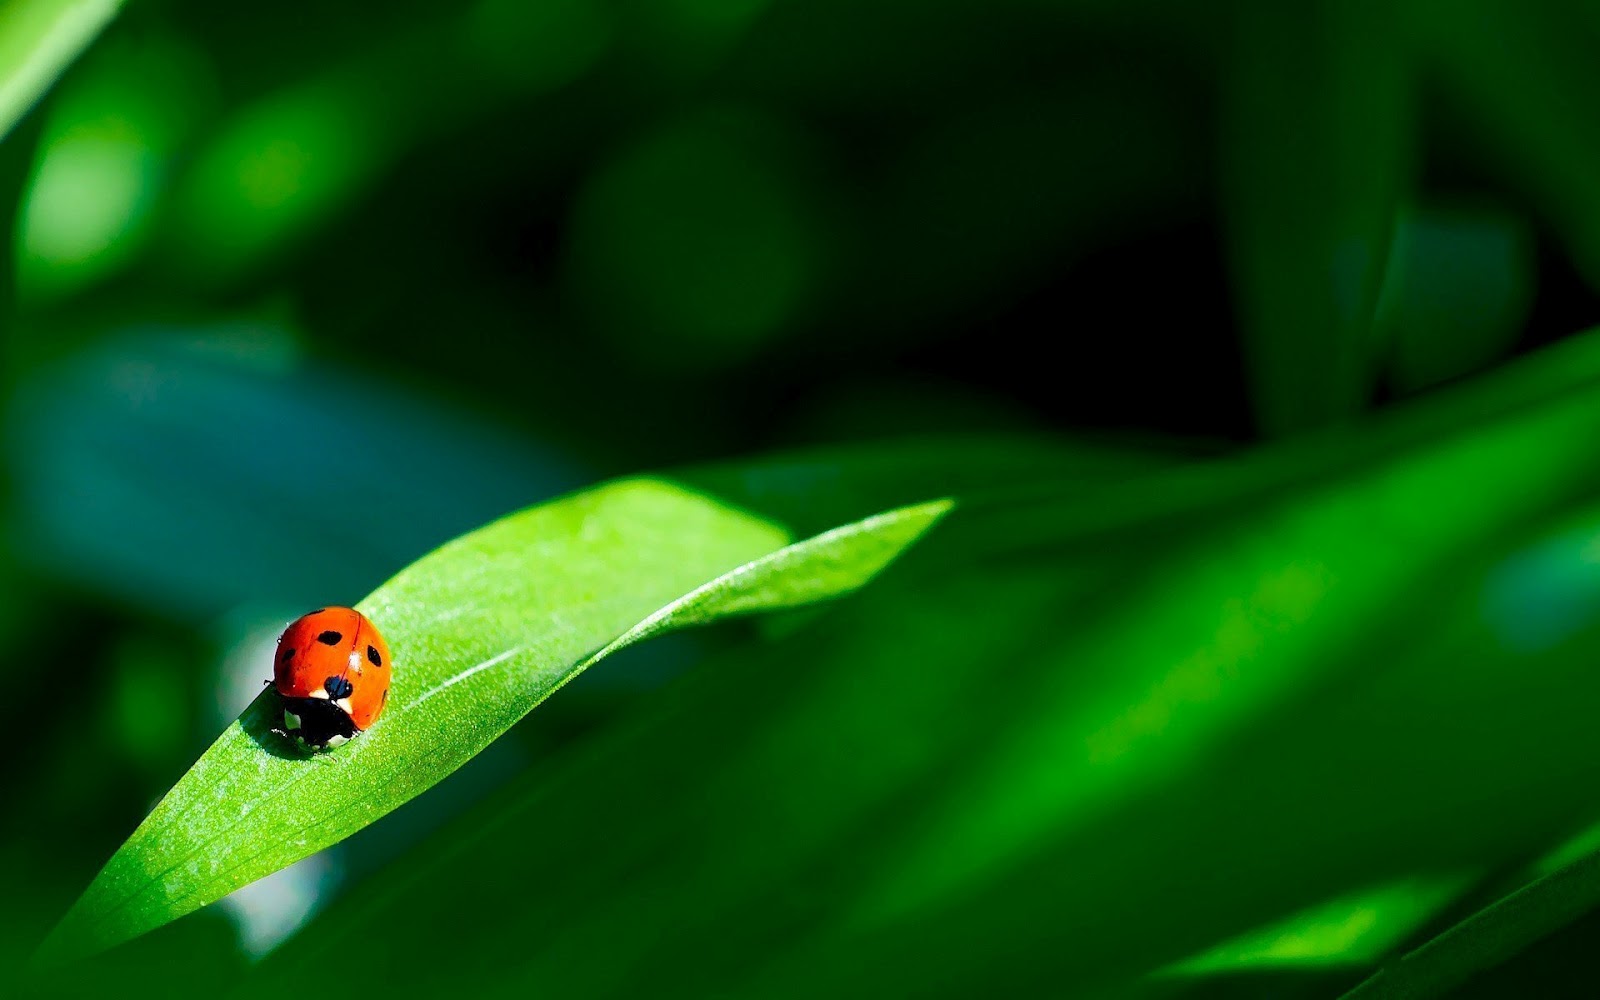 HD Ladybug Wallpaper With A Walking On Green Leaf Ladybugs